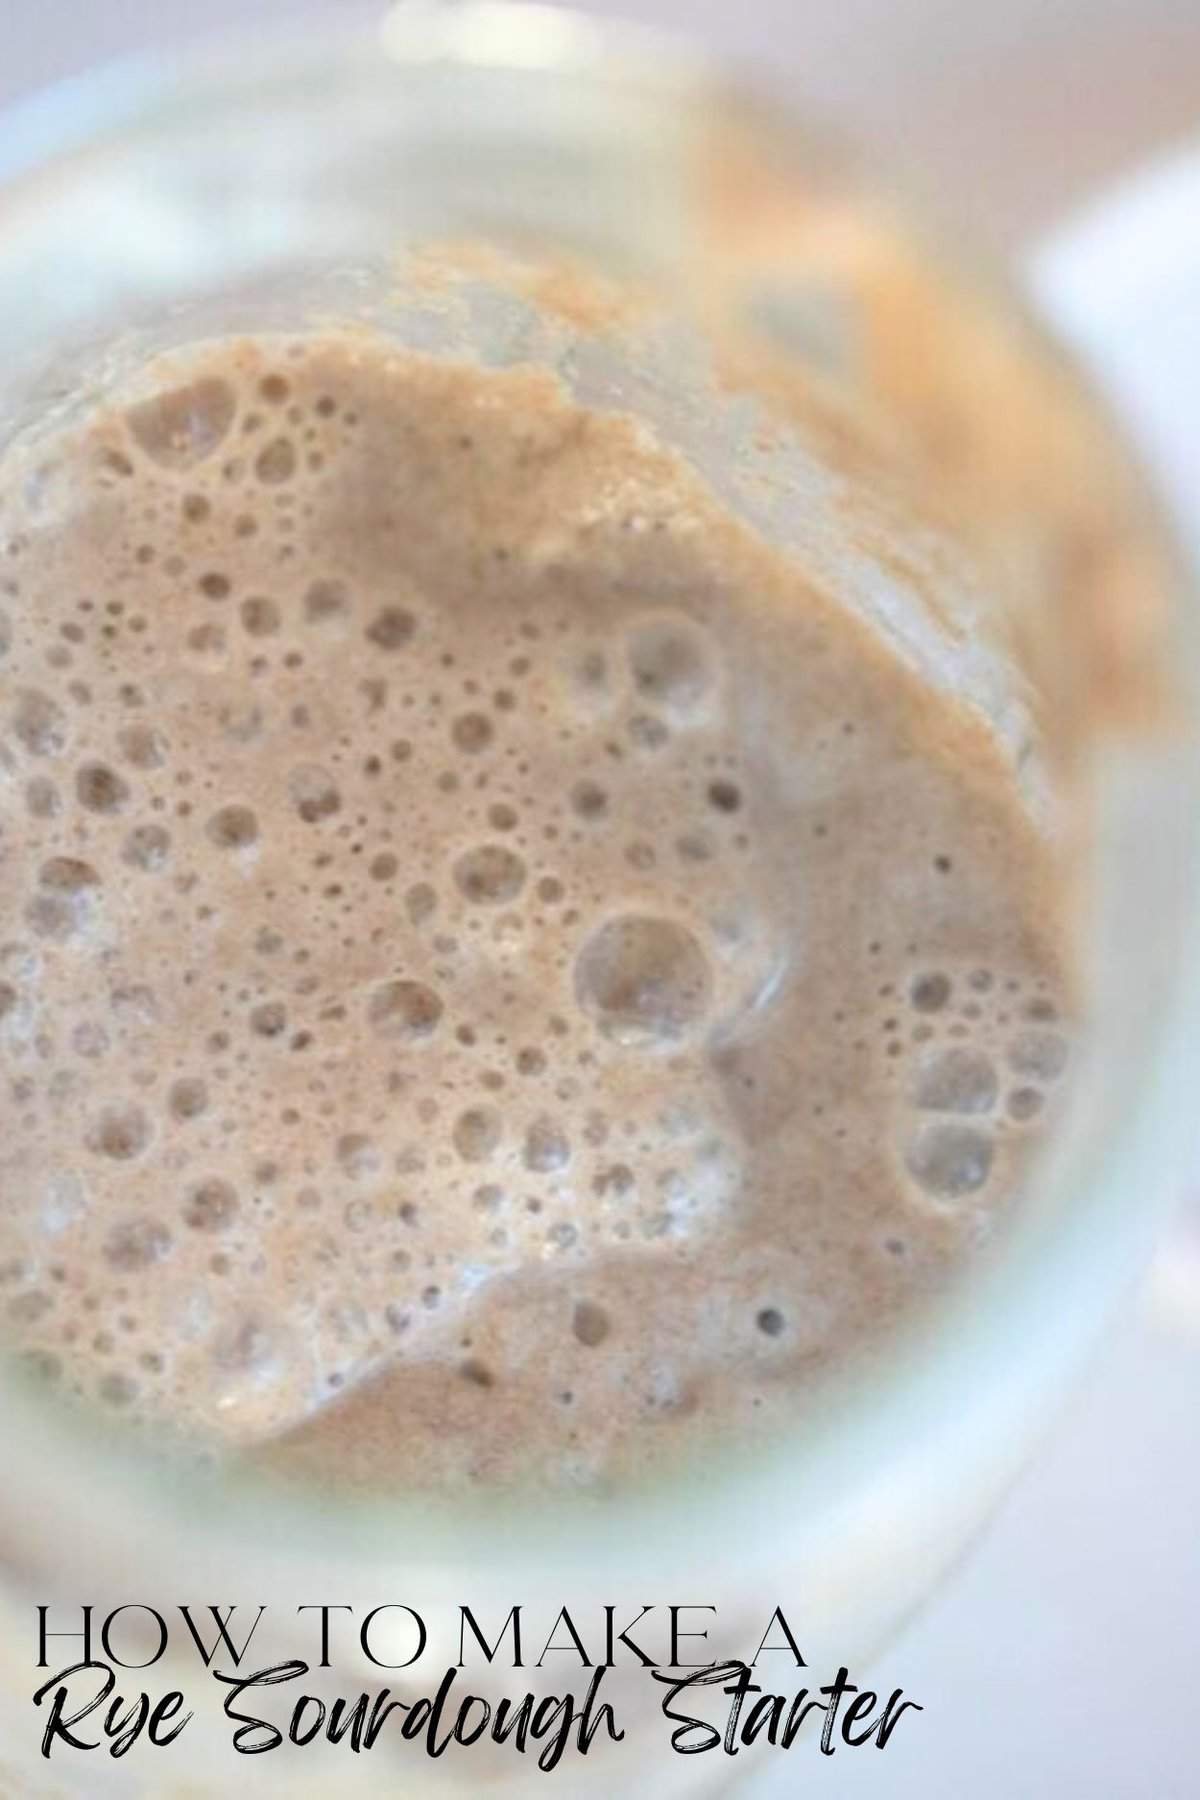 Close up picture of a rye sourdough starter in a glass mason jar.